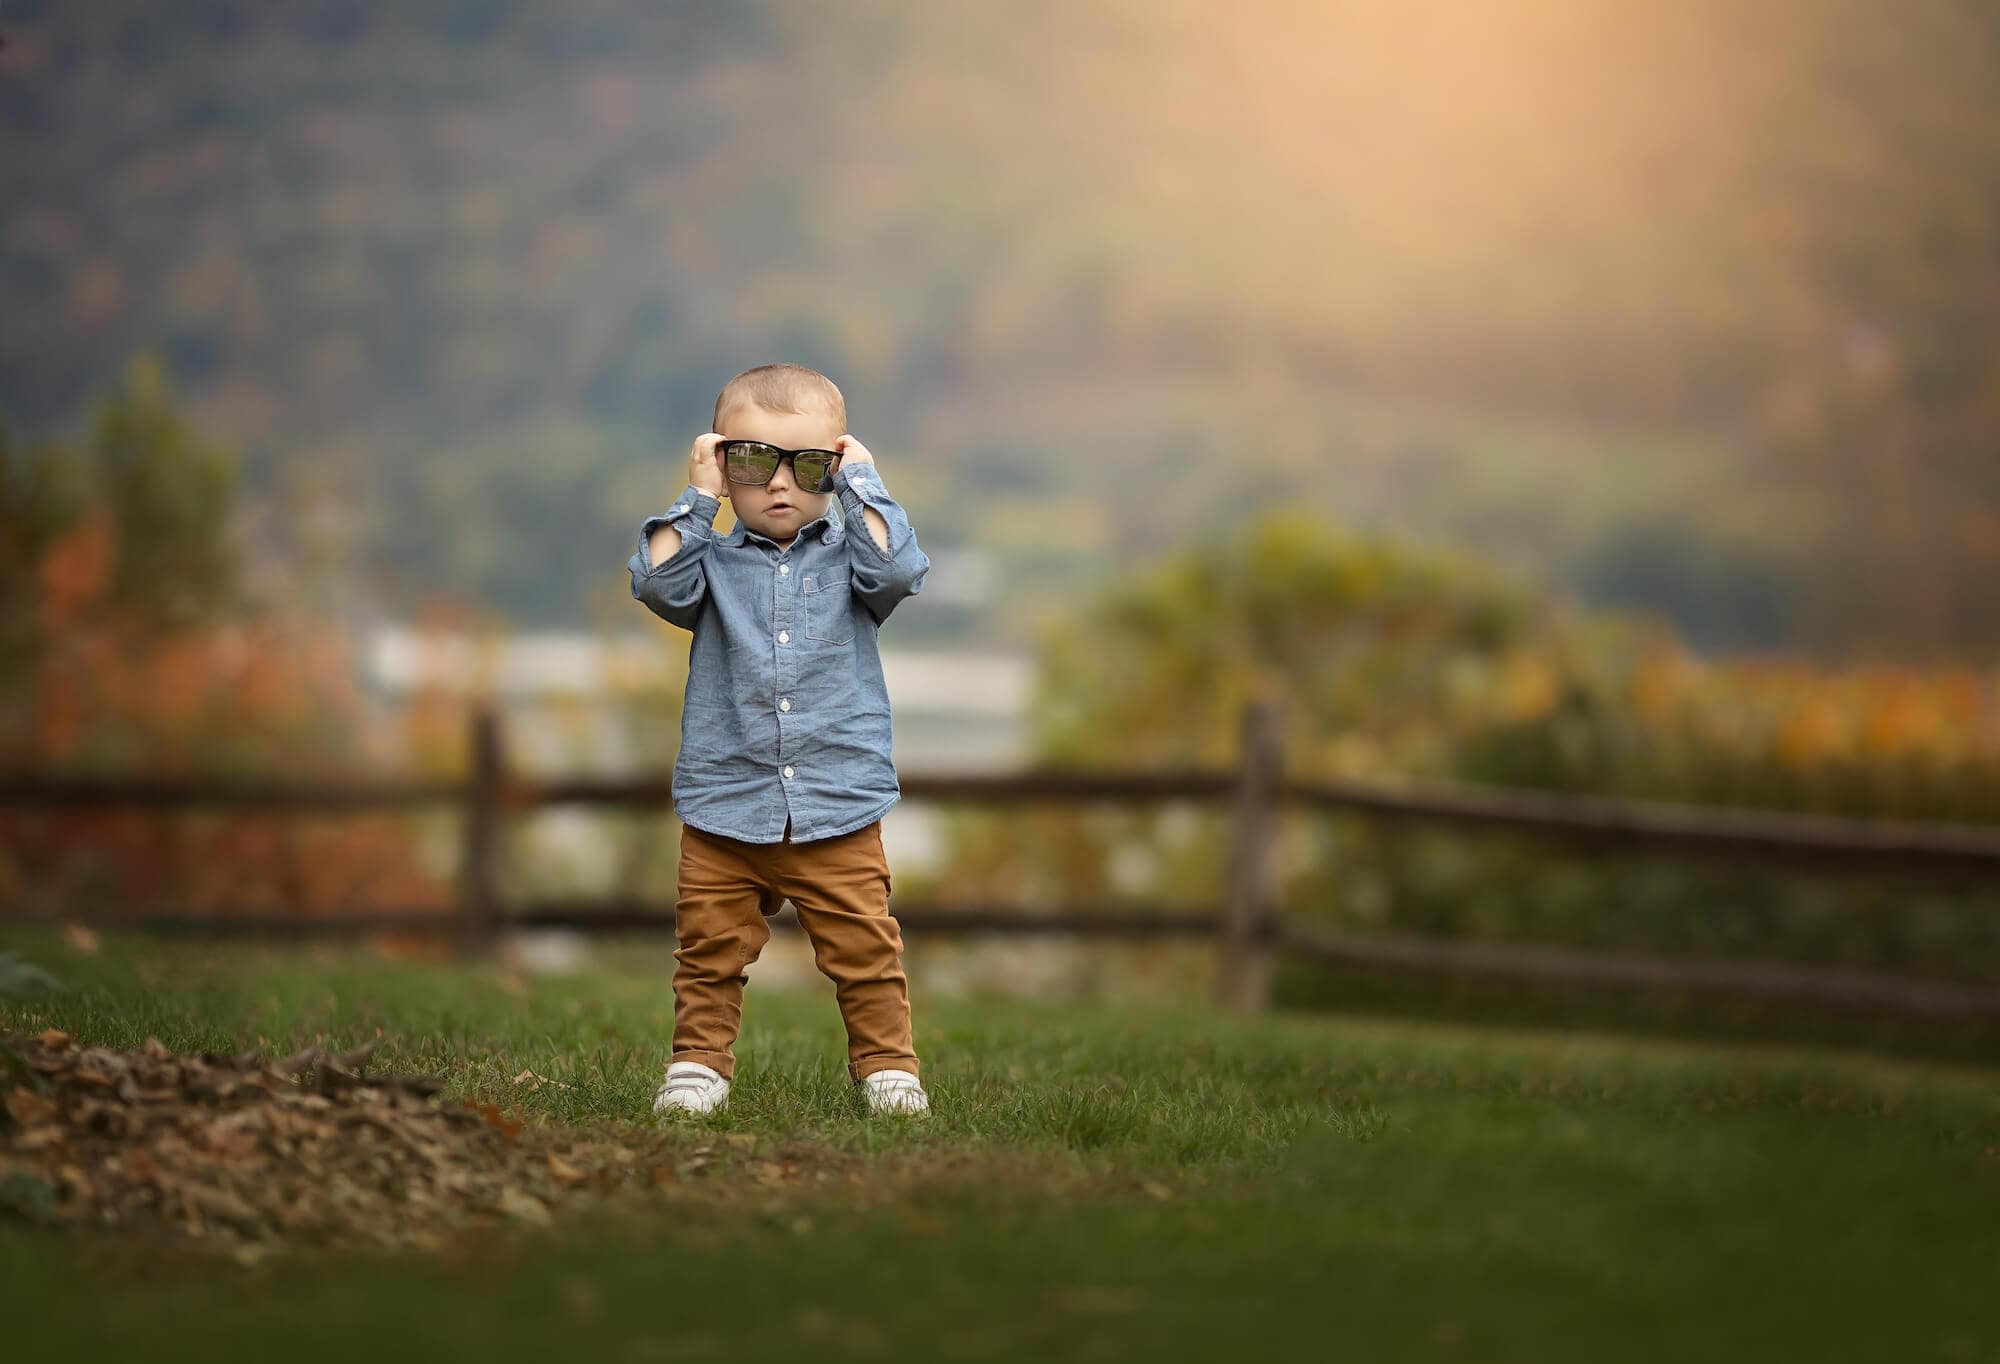 Childhood portrait photographer captures image of little boy wearing large sunglasses near Camp Hill PA